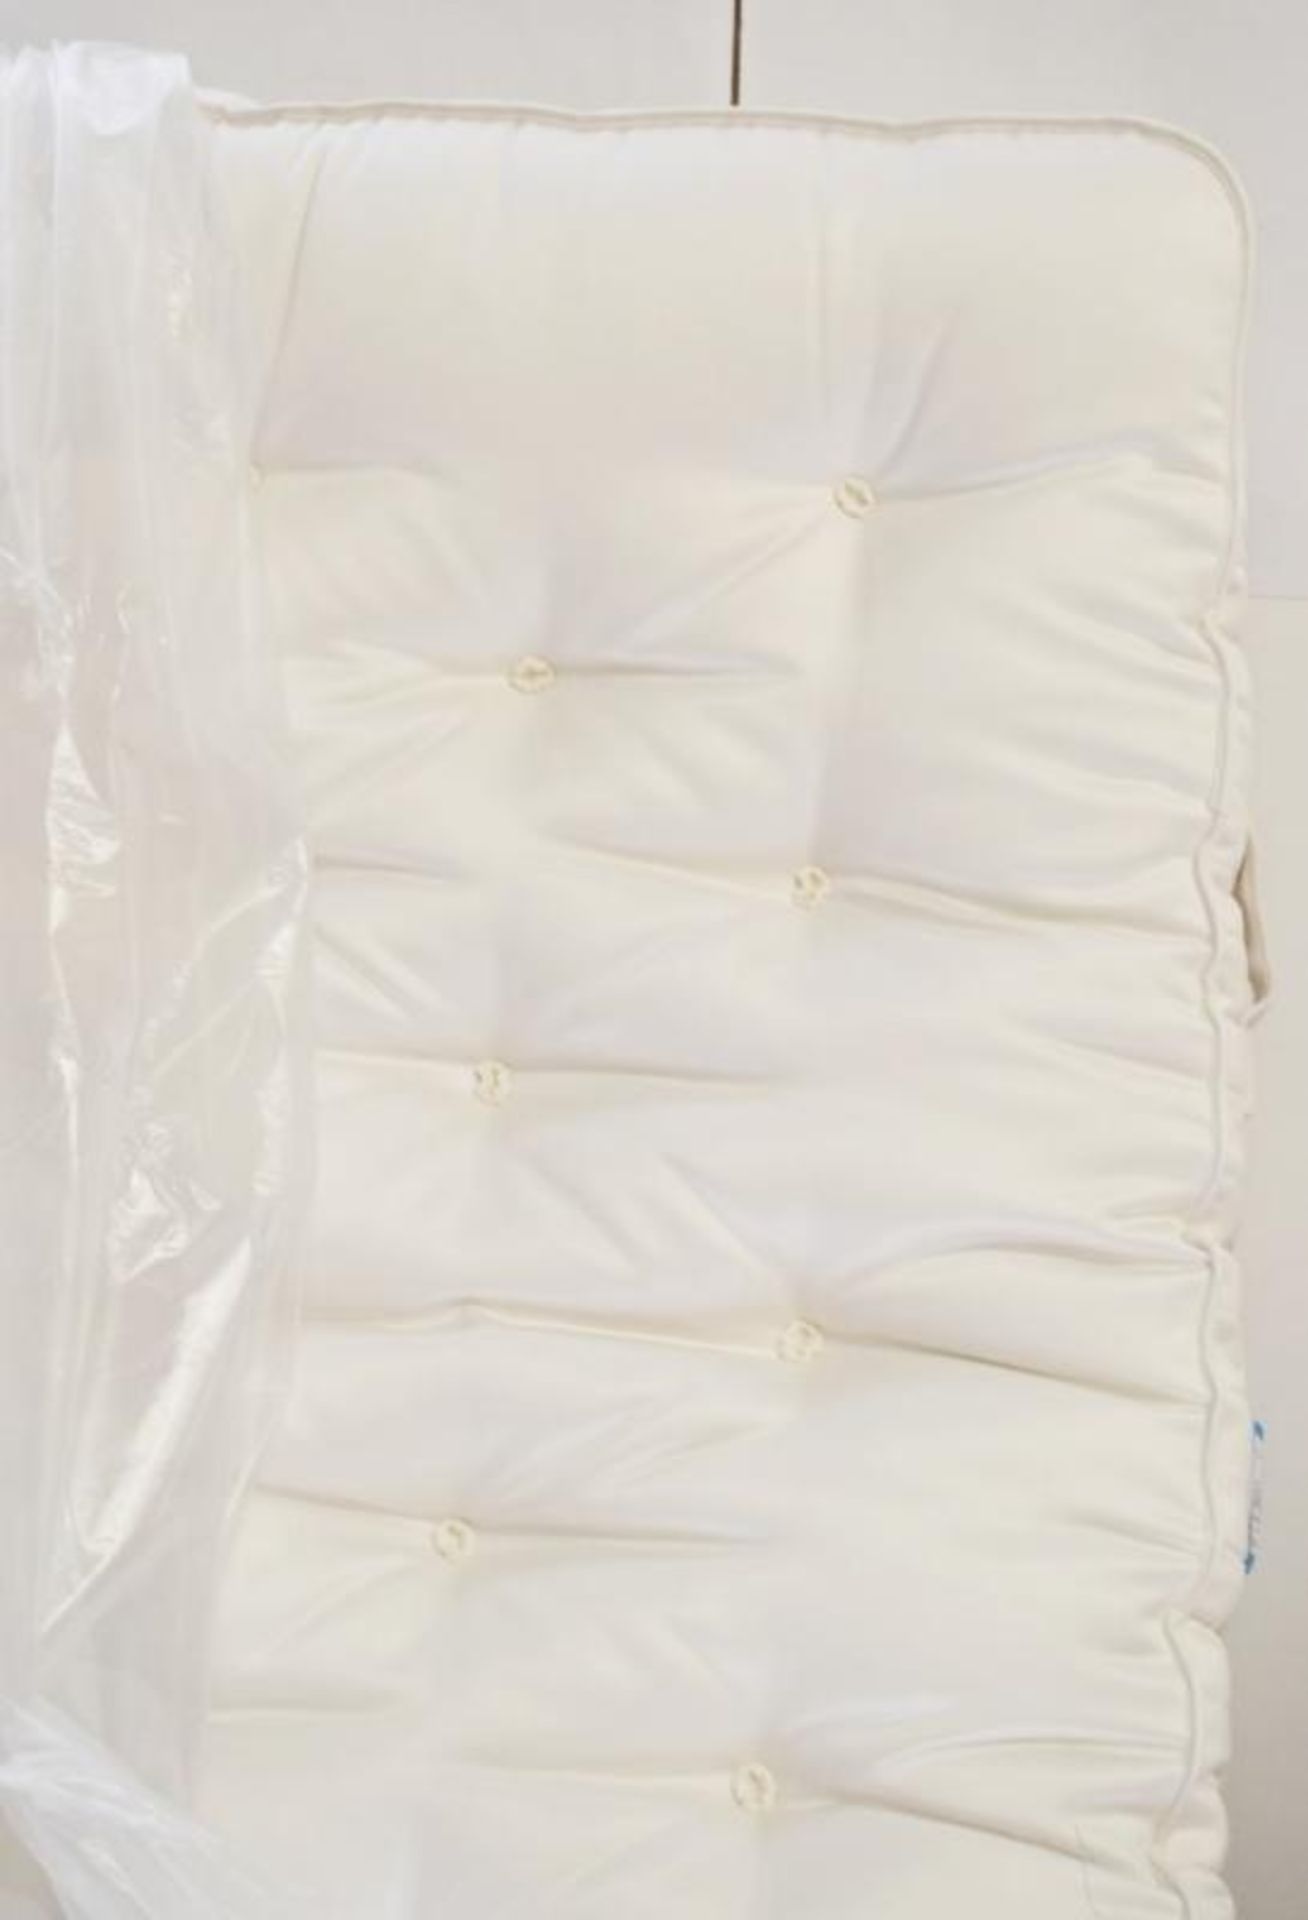 1 x Vispring 'Bedstead Supreme' Luxury FIRM Mattress - Size: 175 x 200 x 23cm - British Made - Image 4 of 10